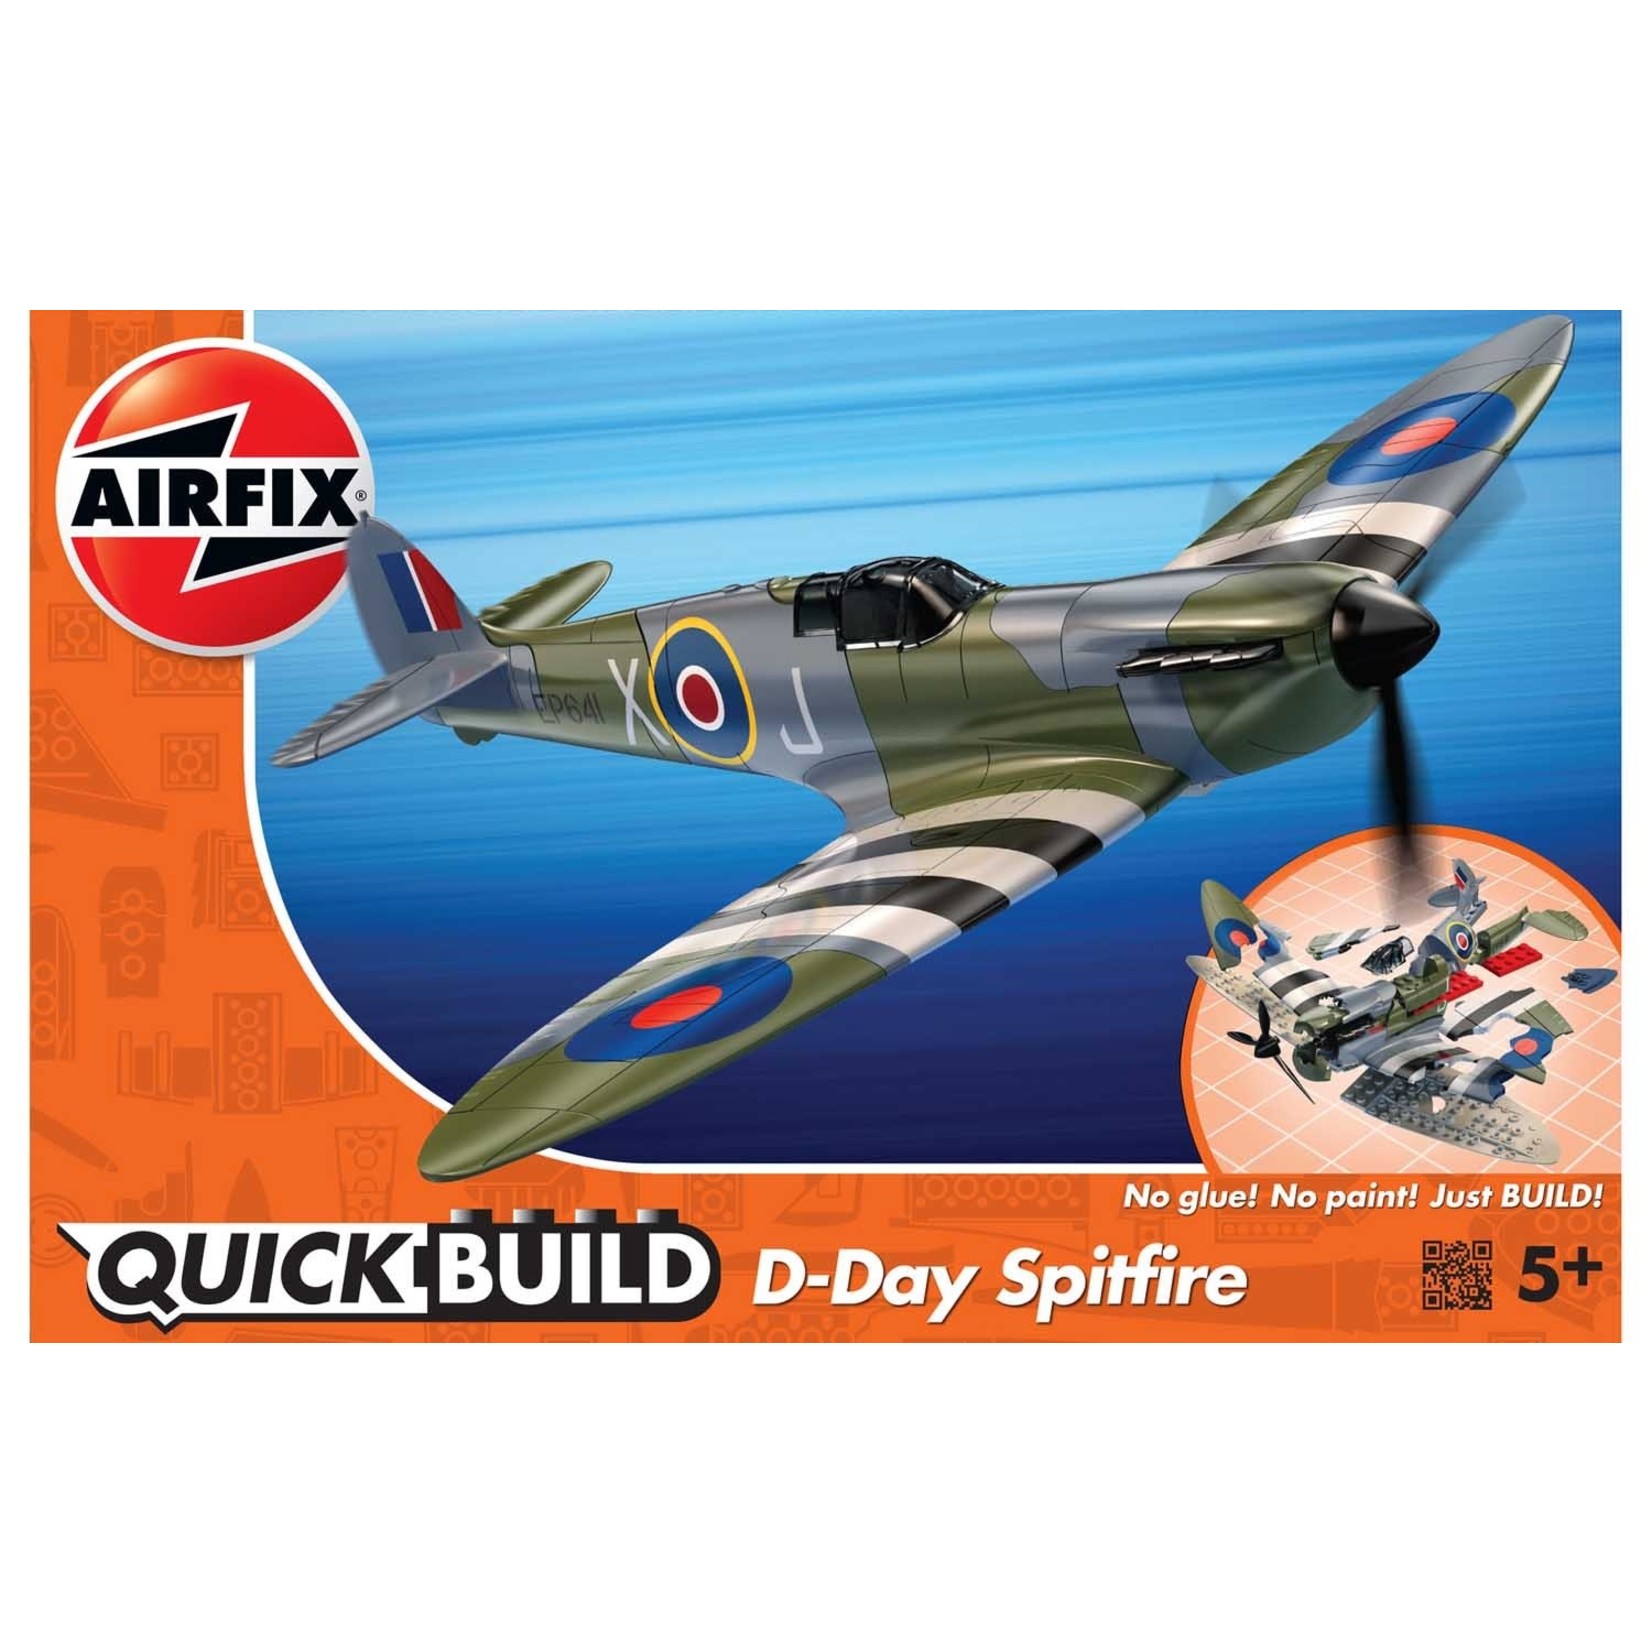 Airfix D-Day Spitfire Quickbuild